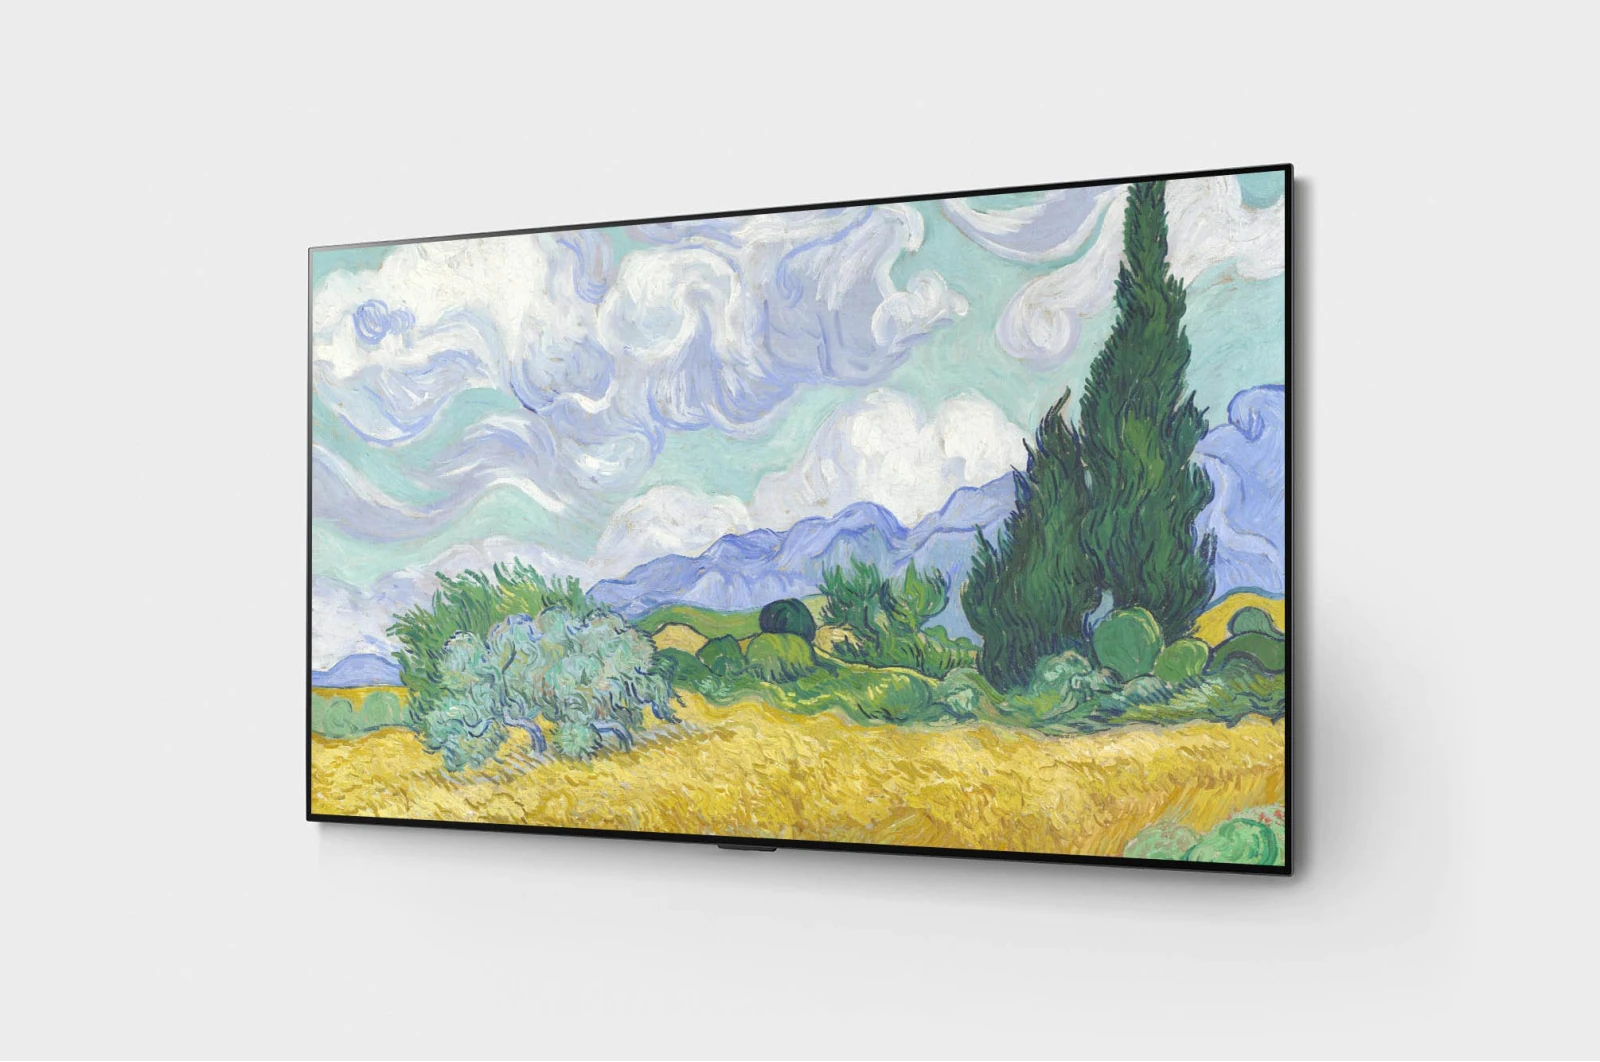 LG OLED Gallery Design (65 inch) 4K TV